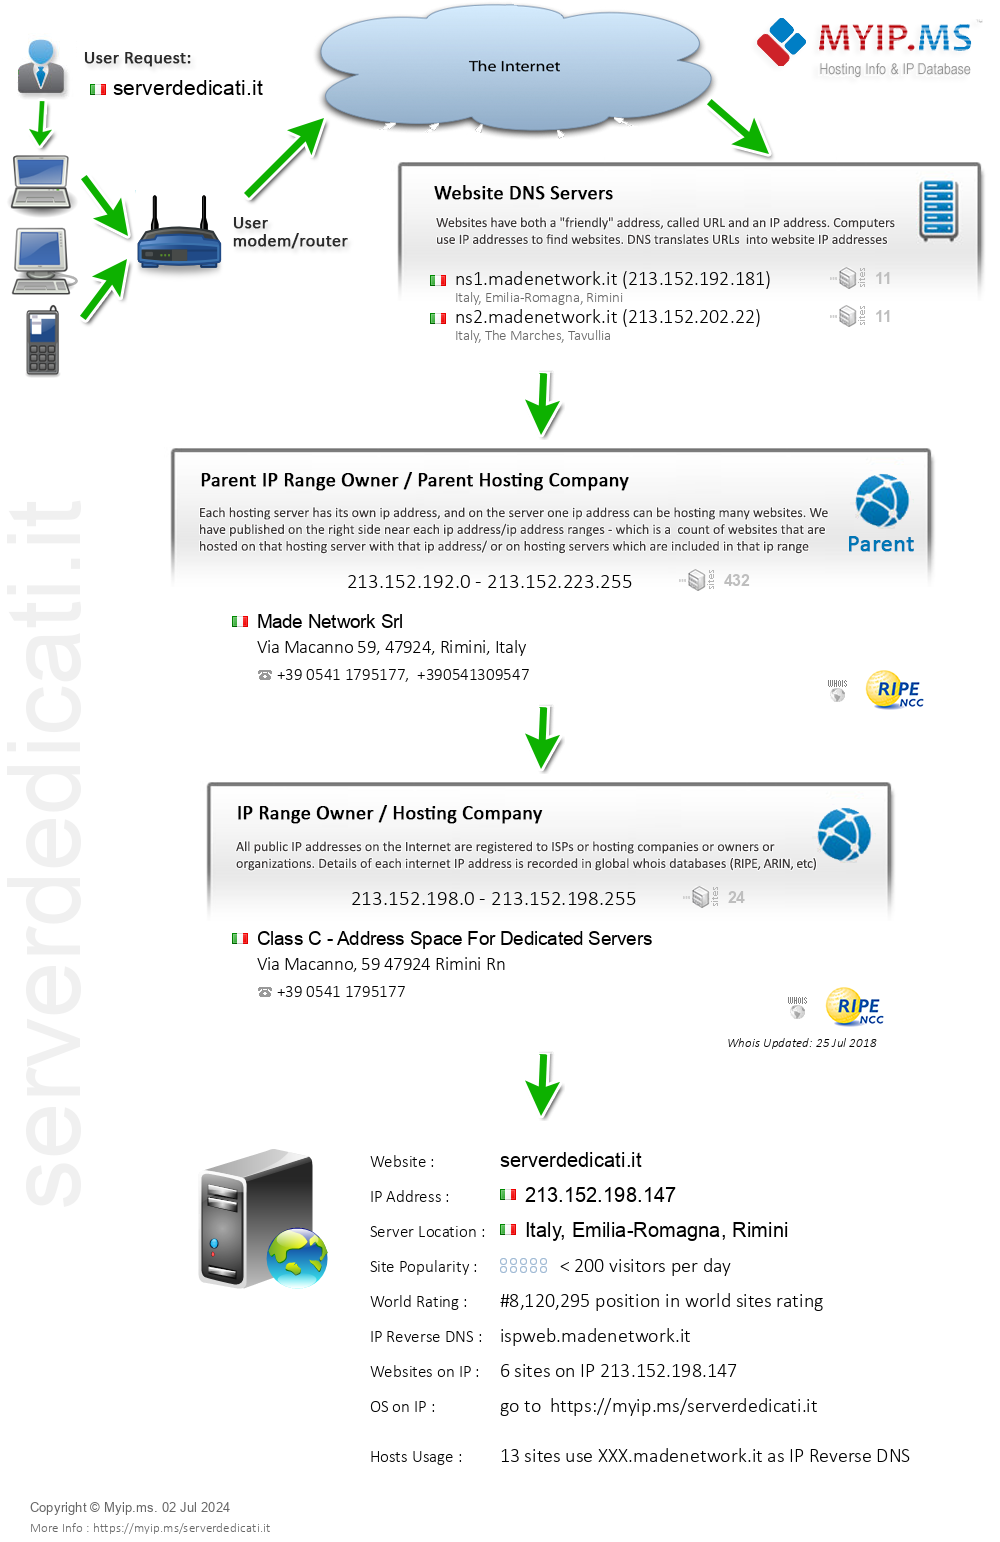 Serverdedicati.it - Website Hosting Visual IP Diagram